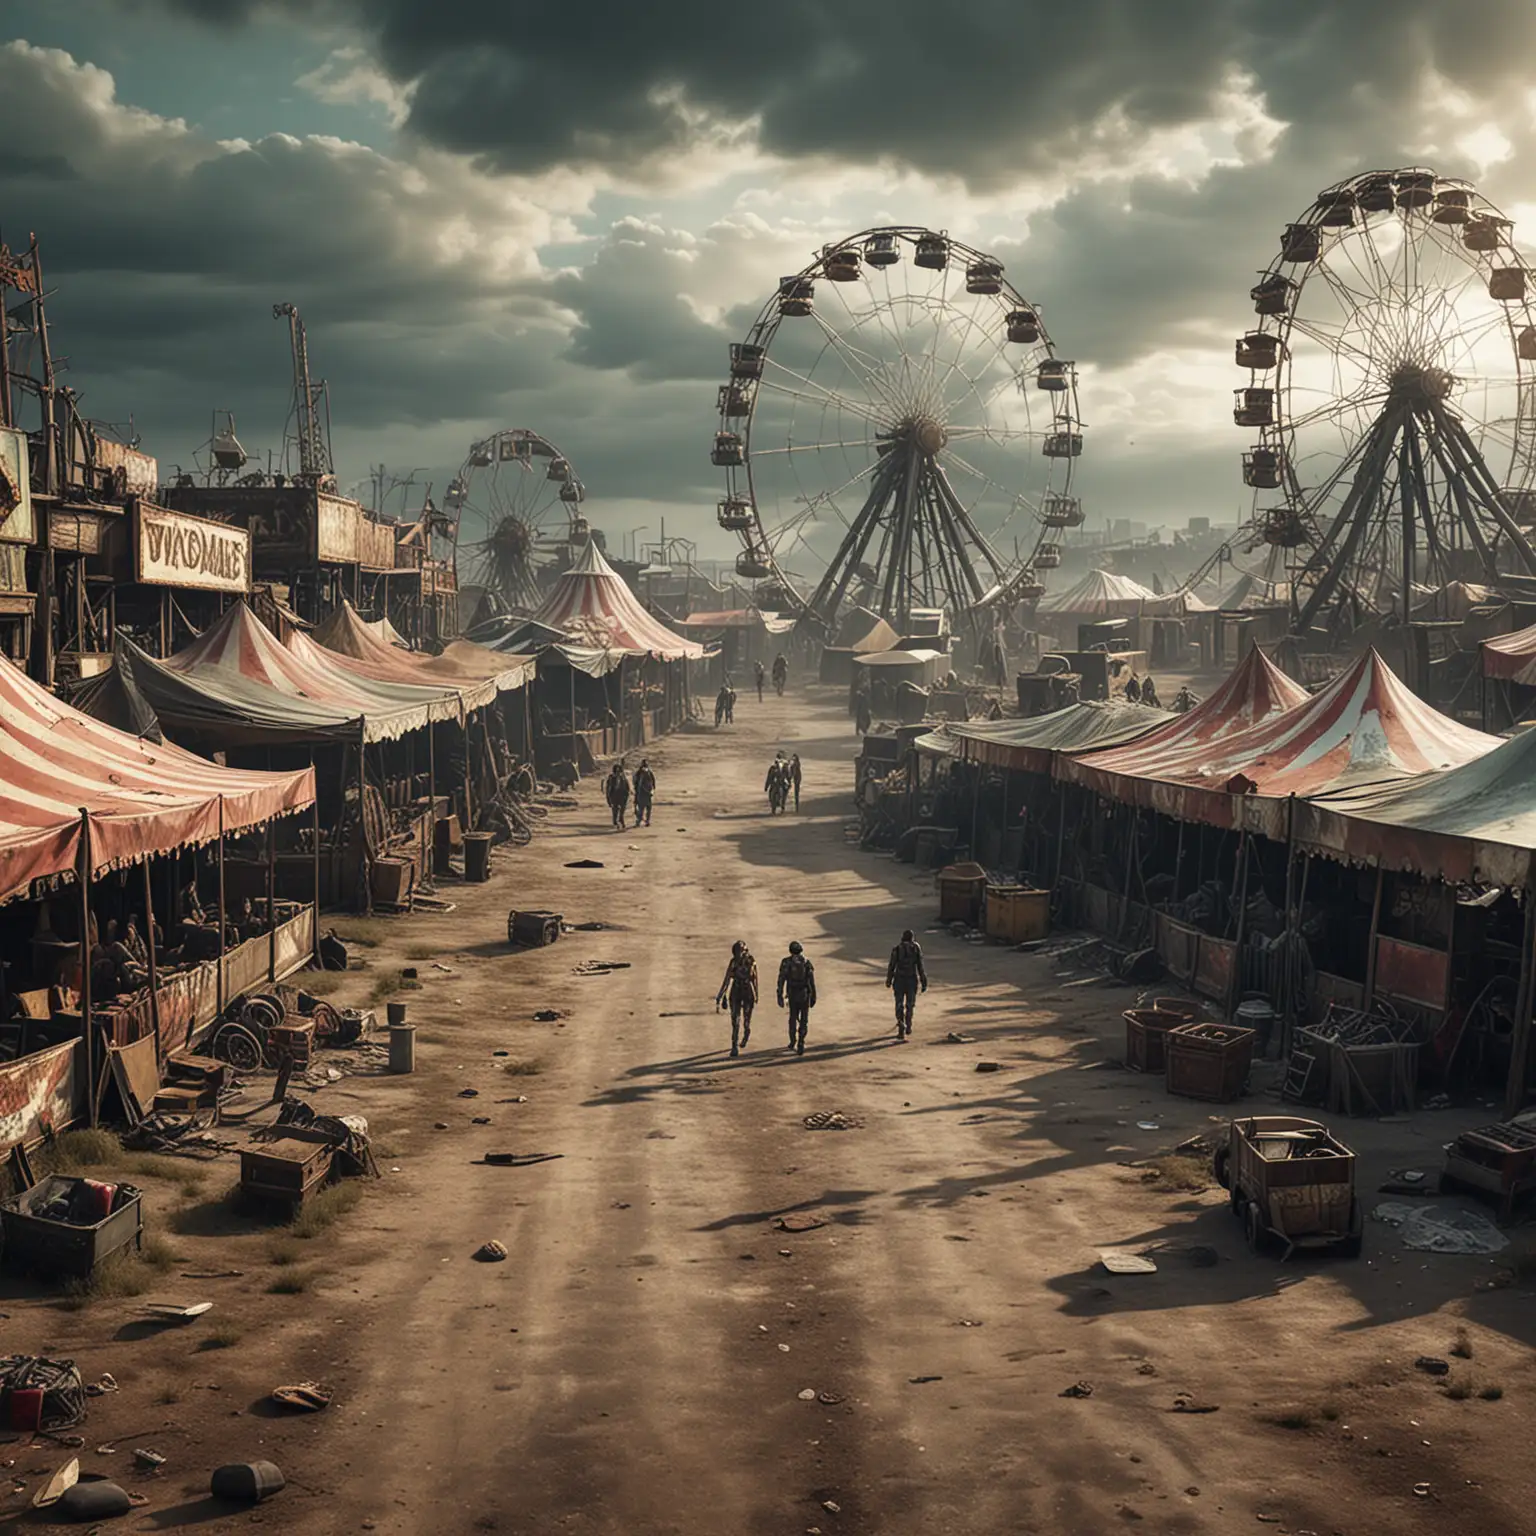 PostApocalyptic Fairground with Zombie Walkers